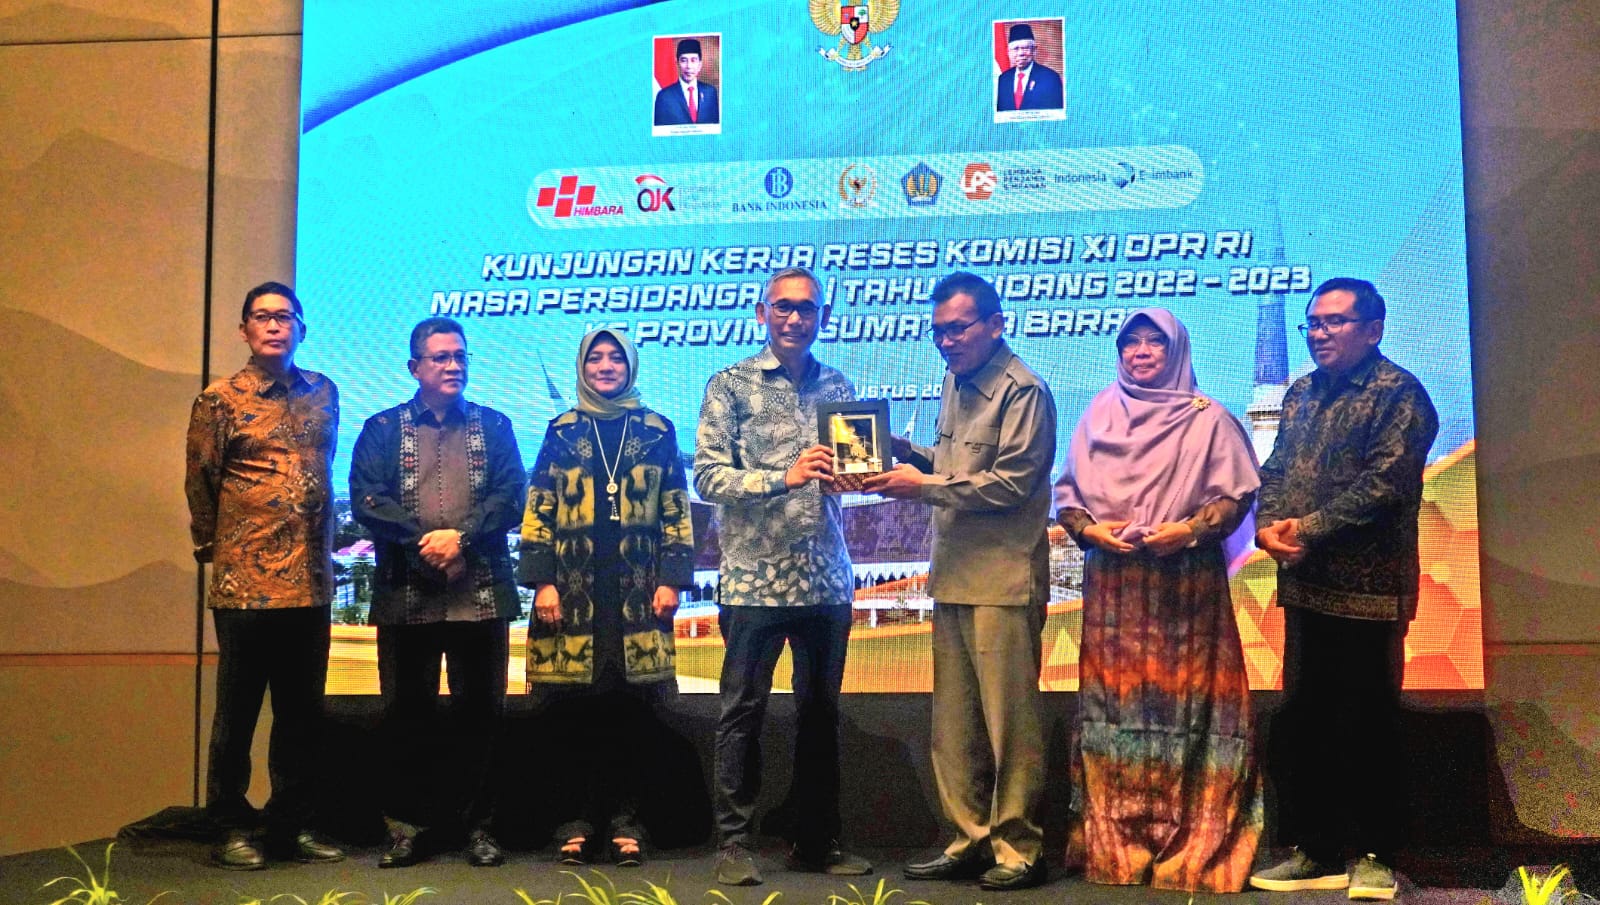 Kunjungan Kerja Reses Komisi XI DPR RI Masa Persidangan V/Tahun Sidang 2022-2023 Ke Provinsi Sumatera Barat